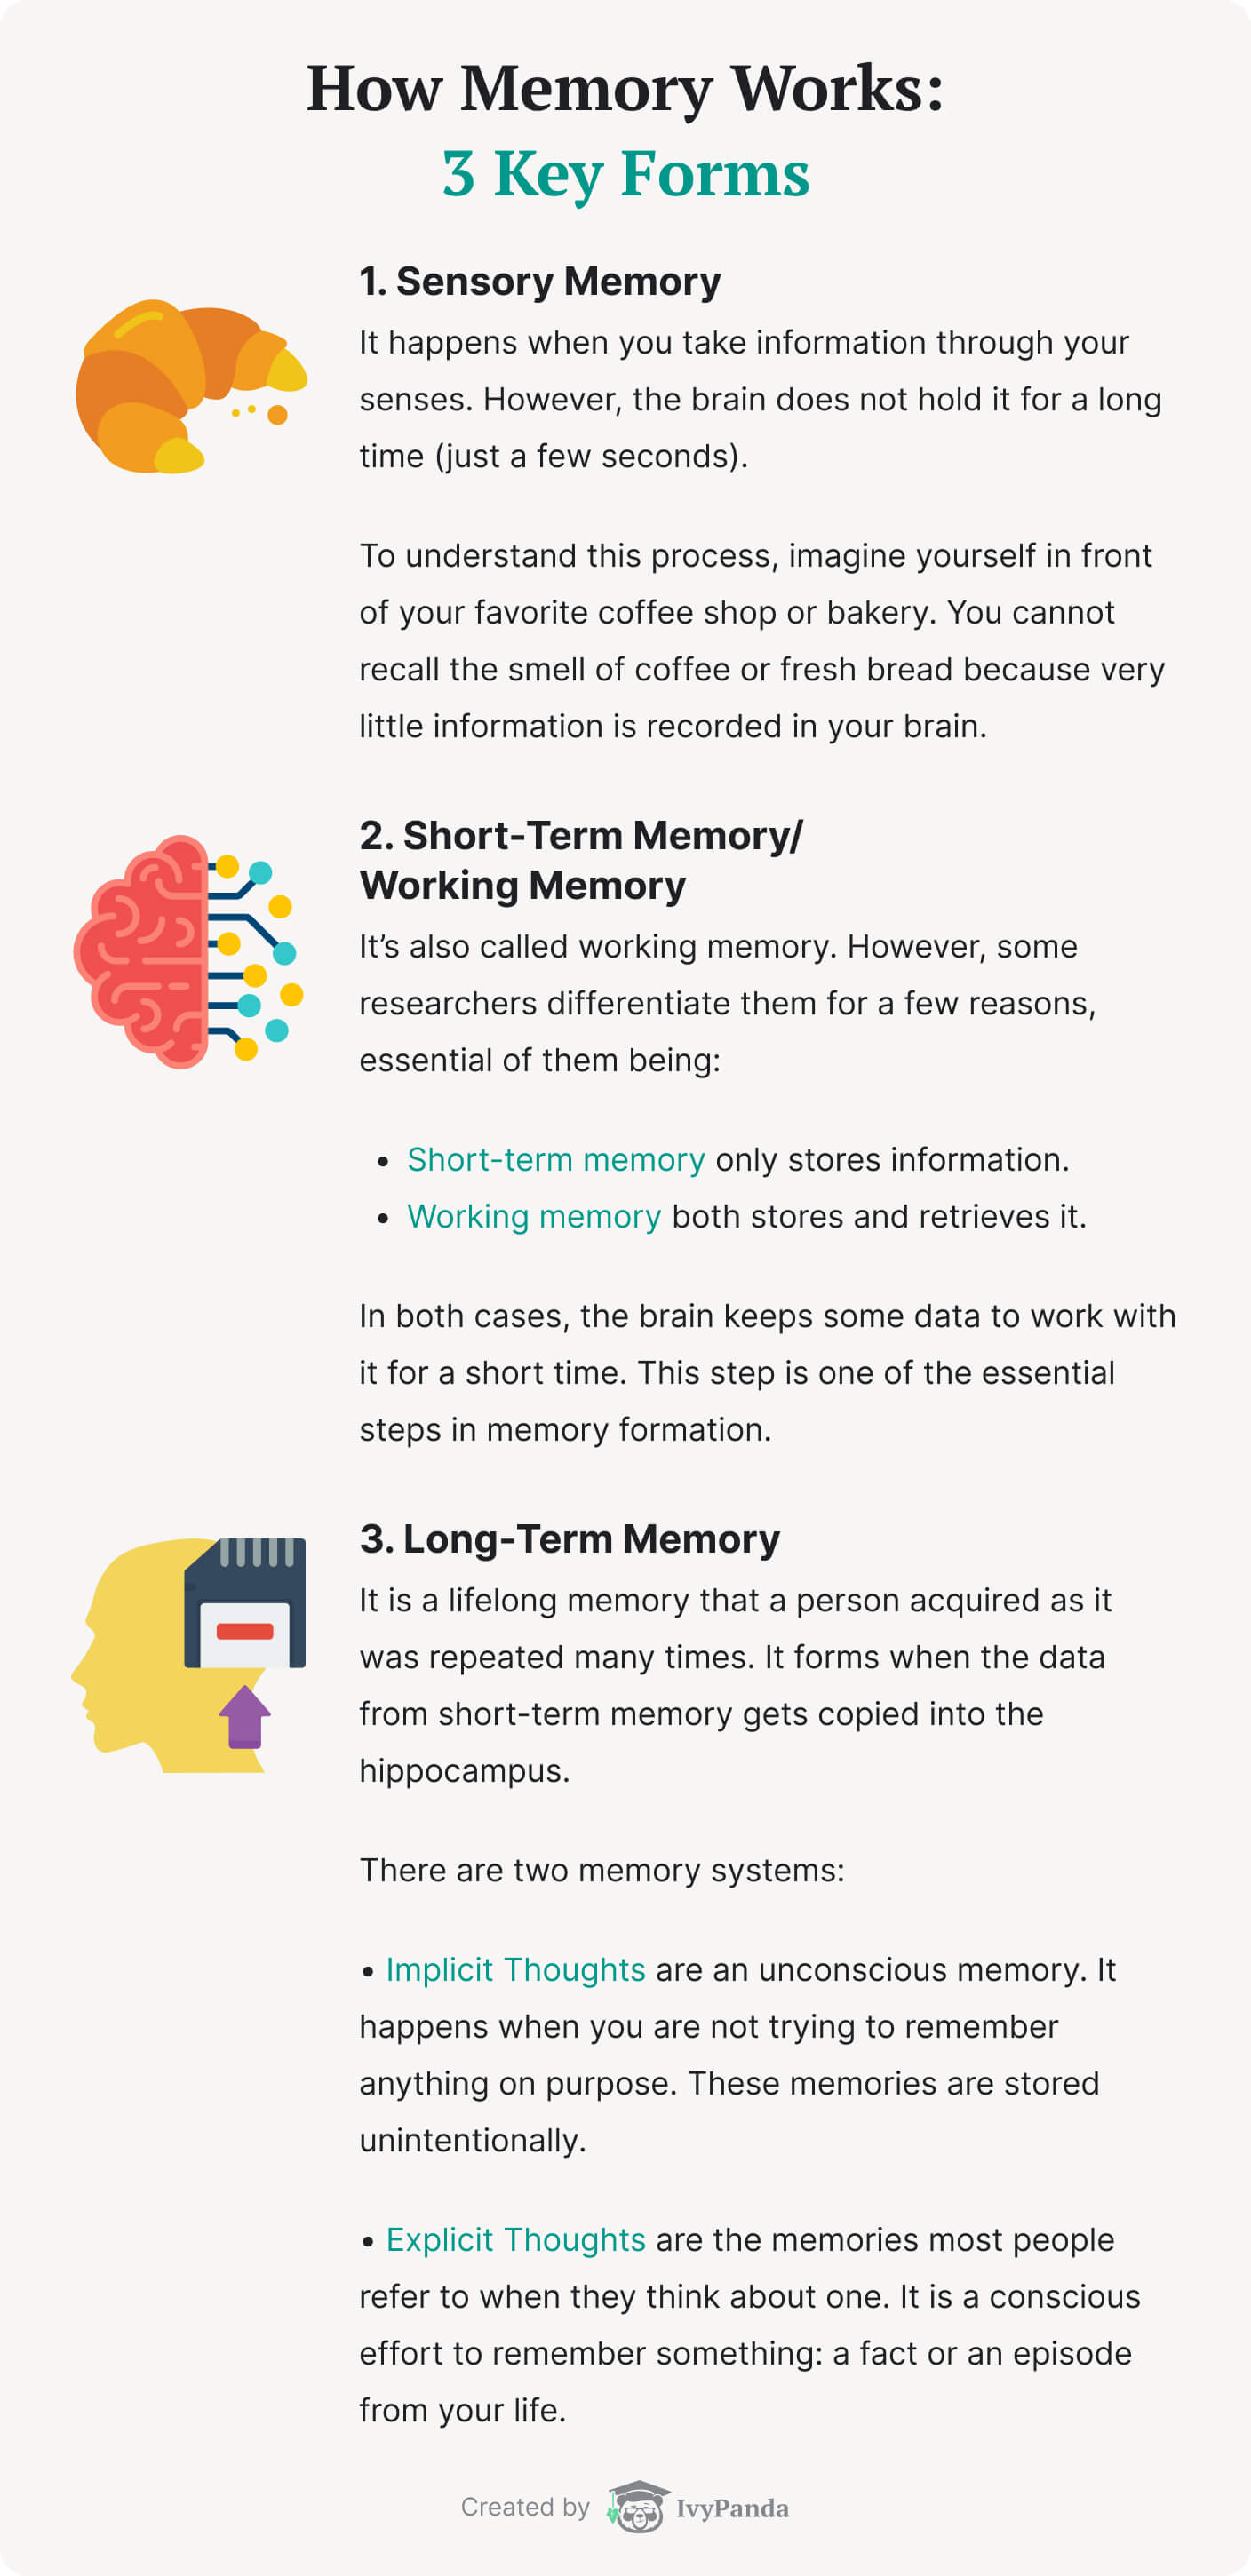 How human memory works.